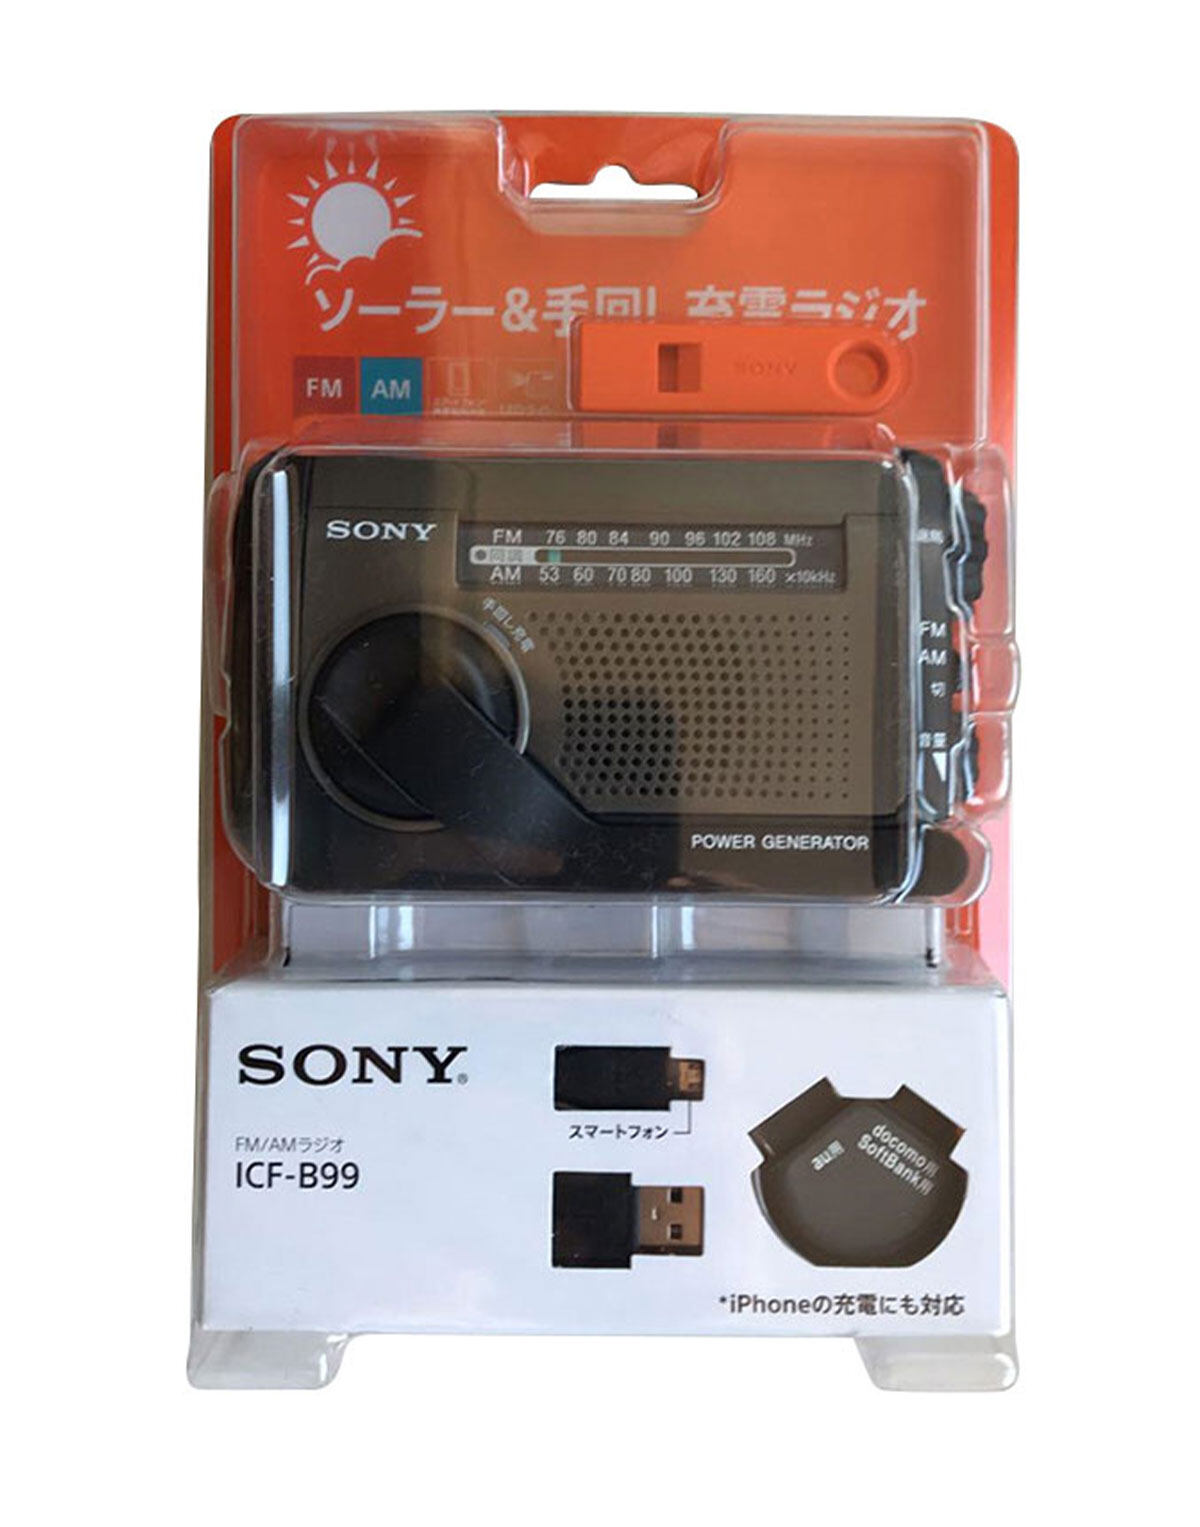 SONY ICF-B99 / ICF-B09 - FM / AM Portable Radio Hand-Cranked and